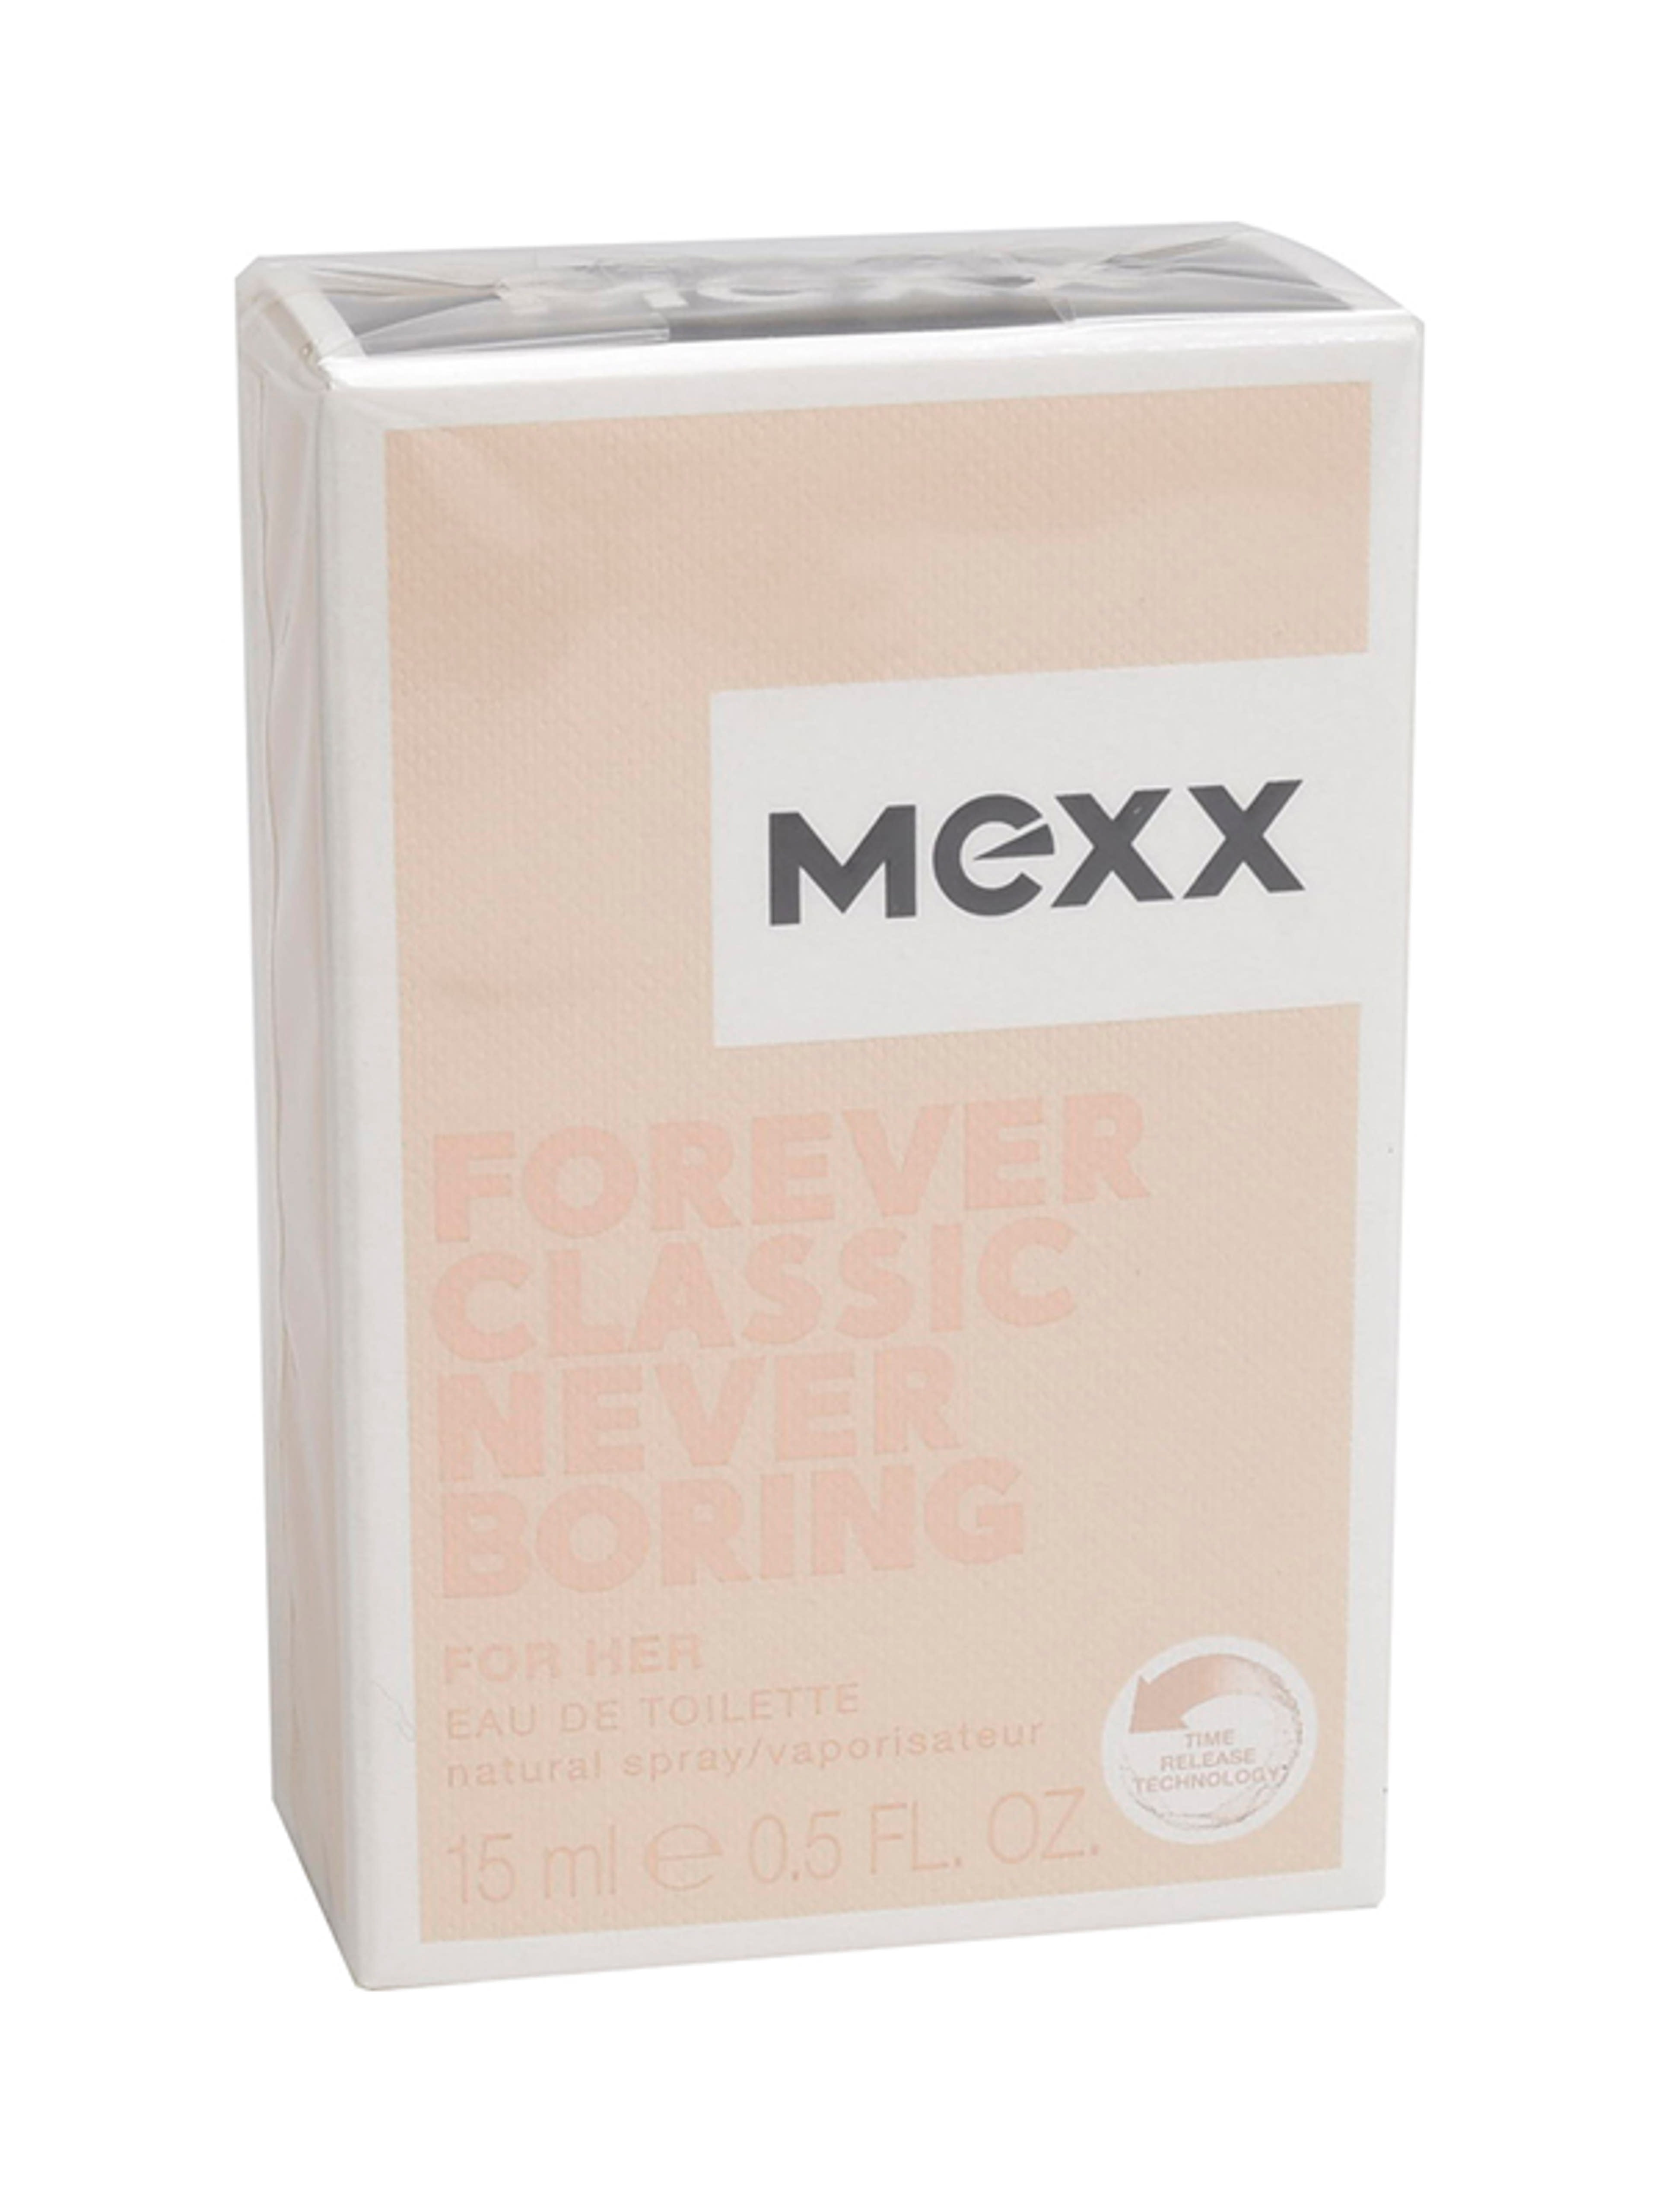 Mexx forever classic never boring női eau de toilette - 15 ml